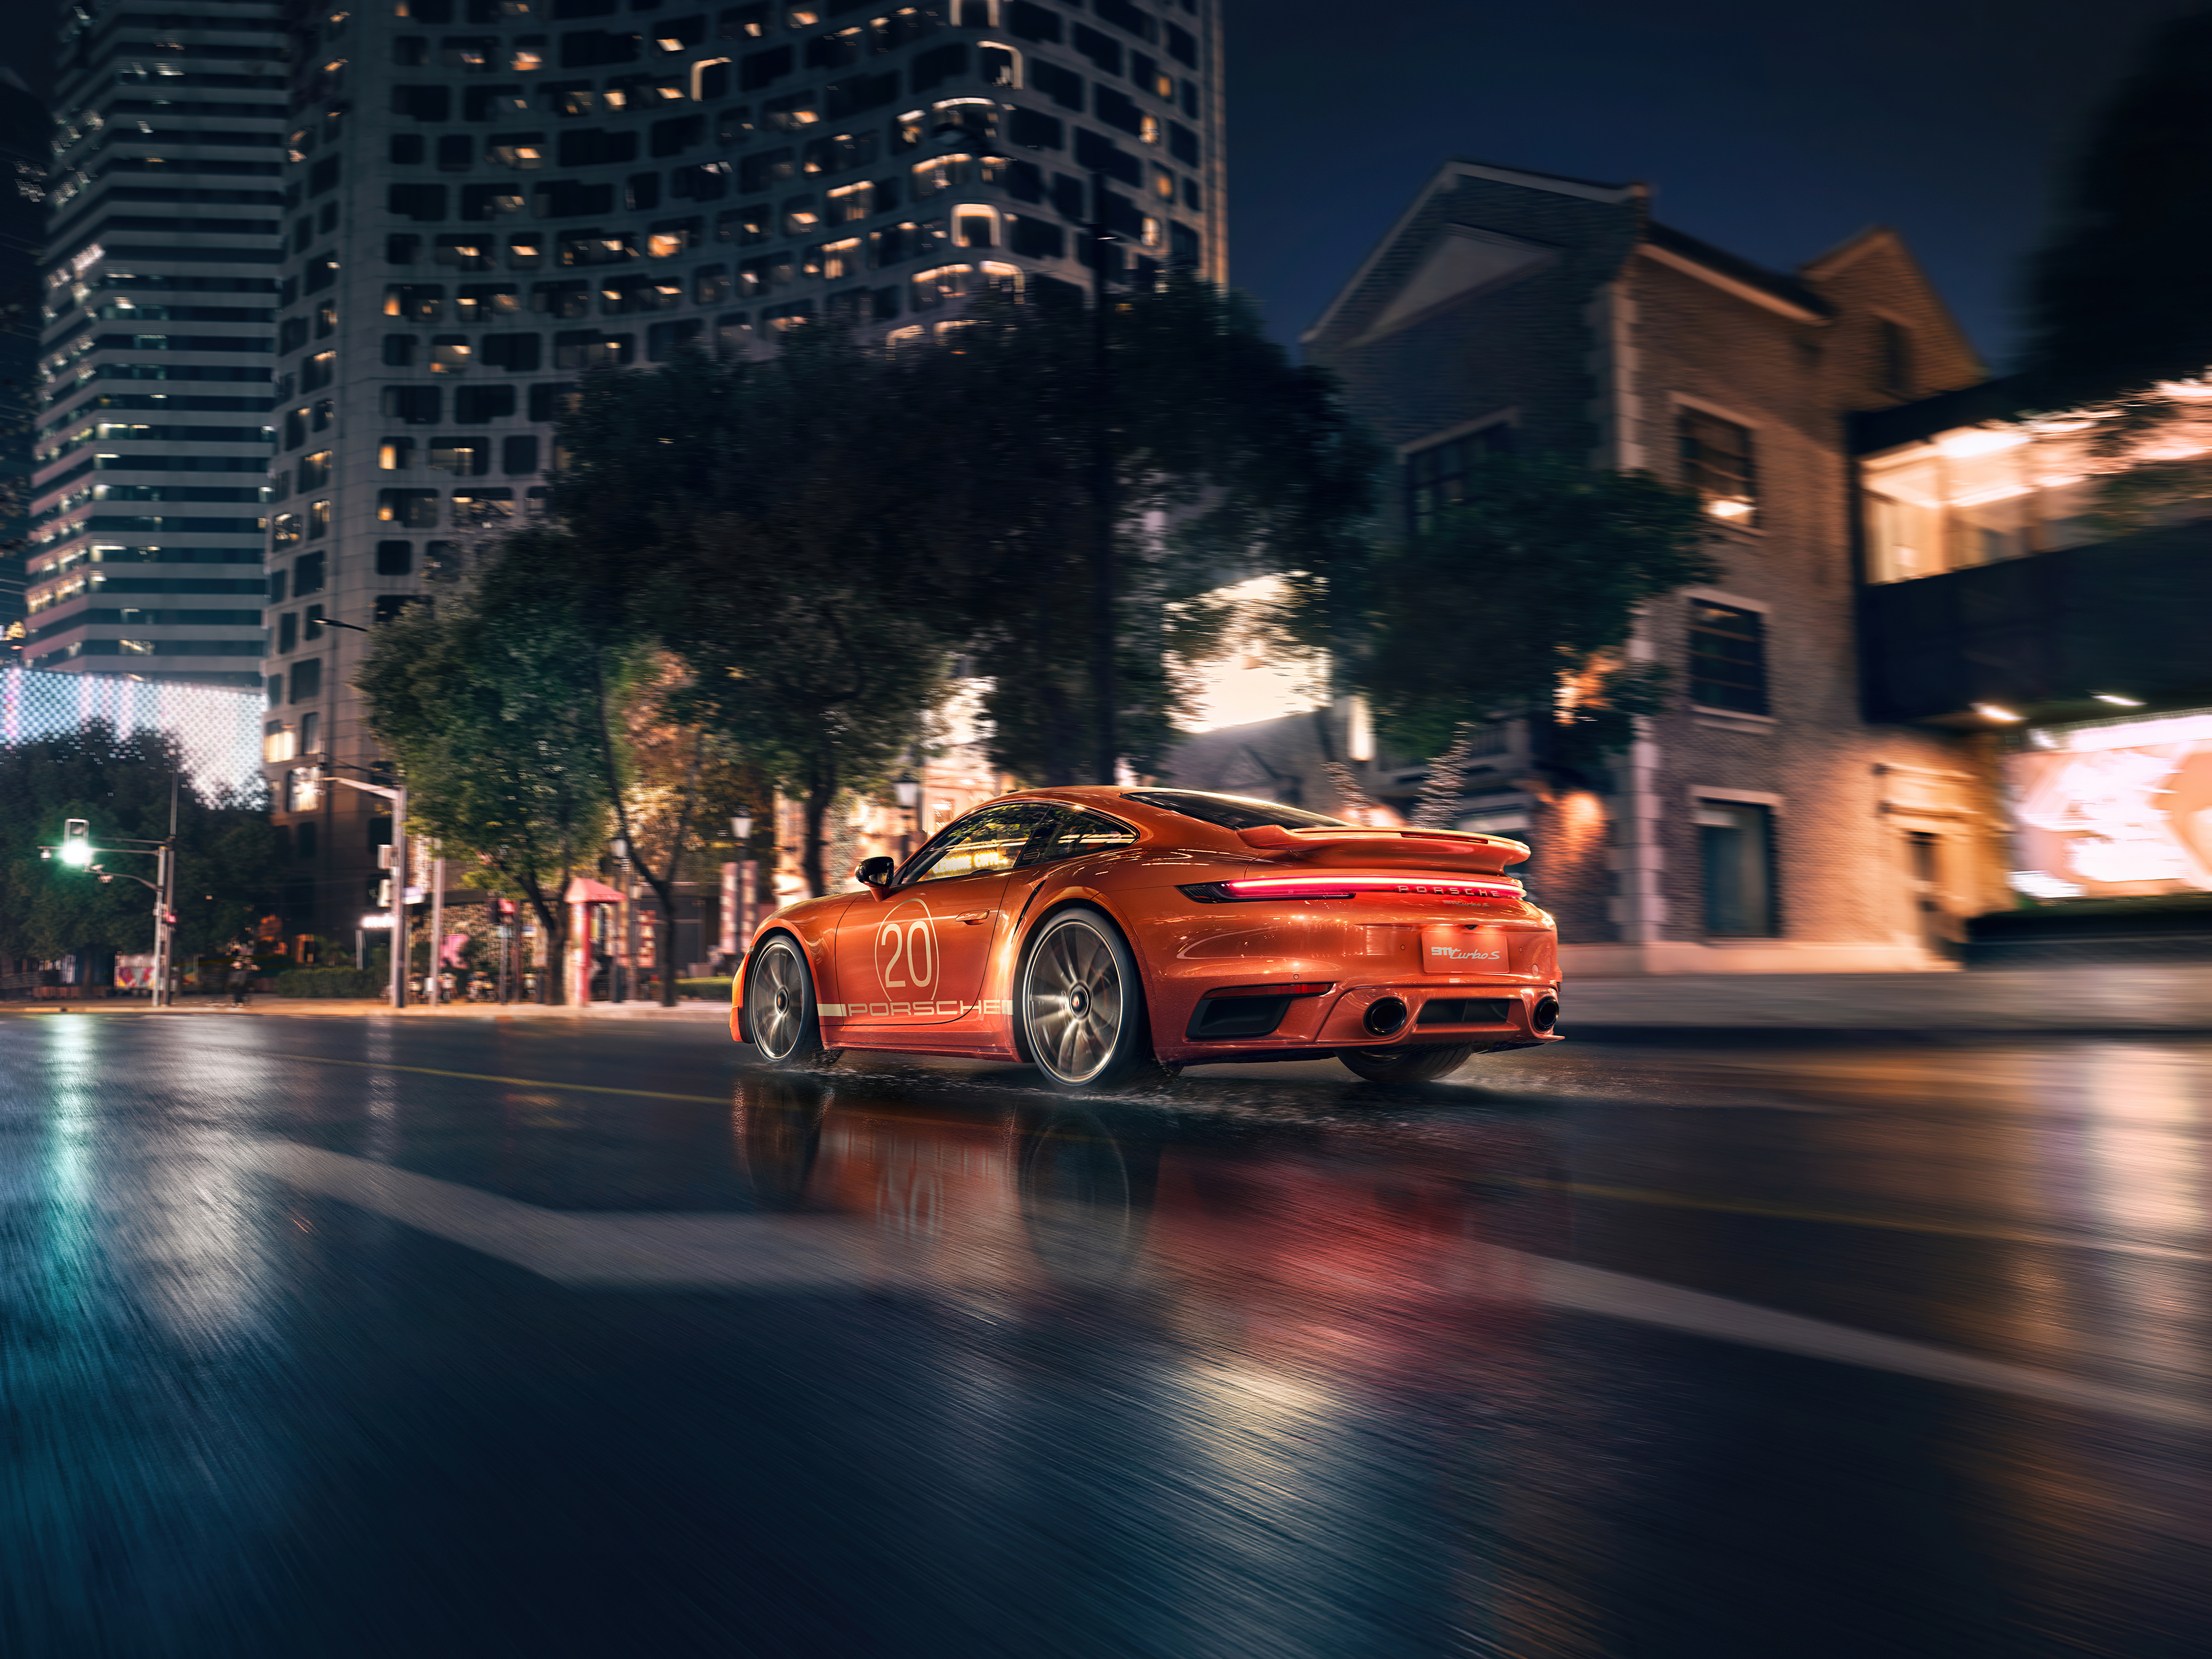 Free photo Orange Porsche rushes through the city at night